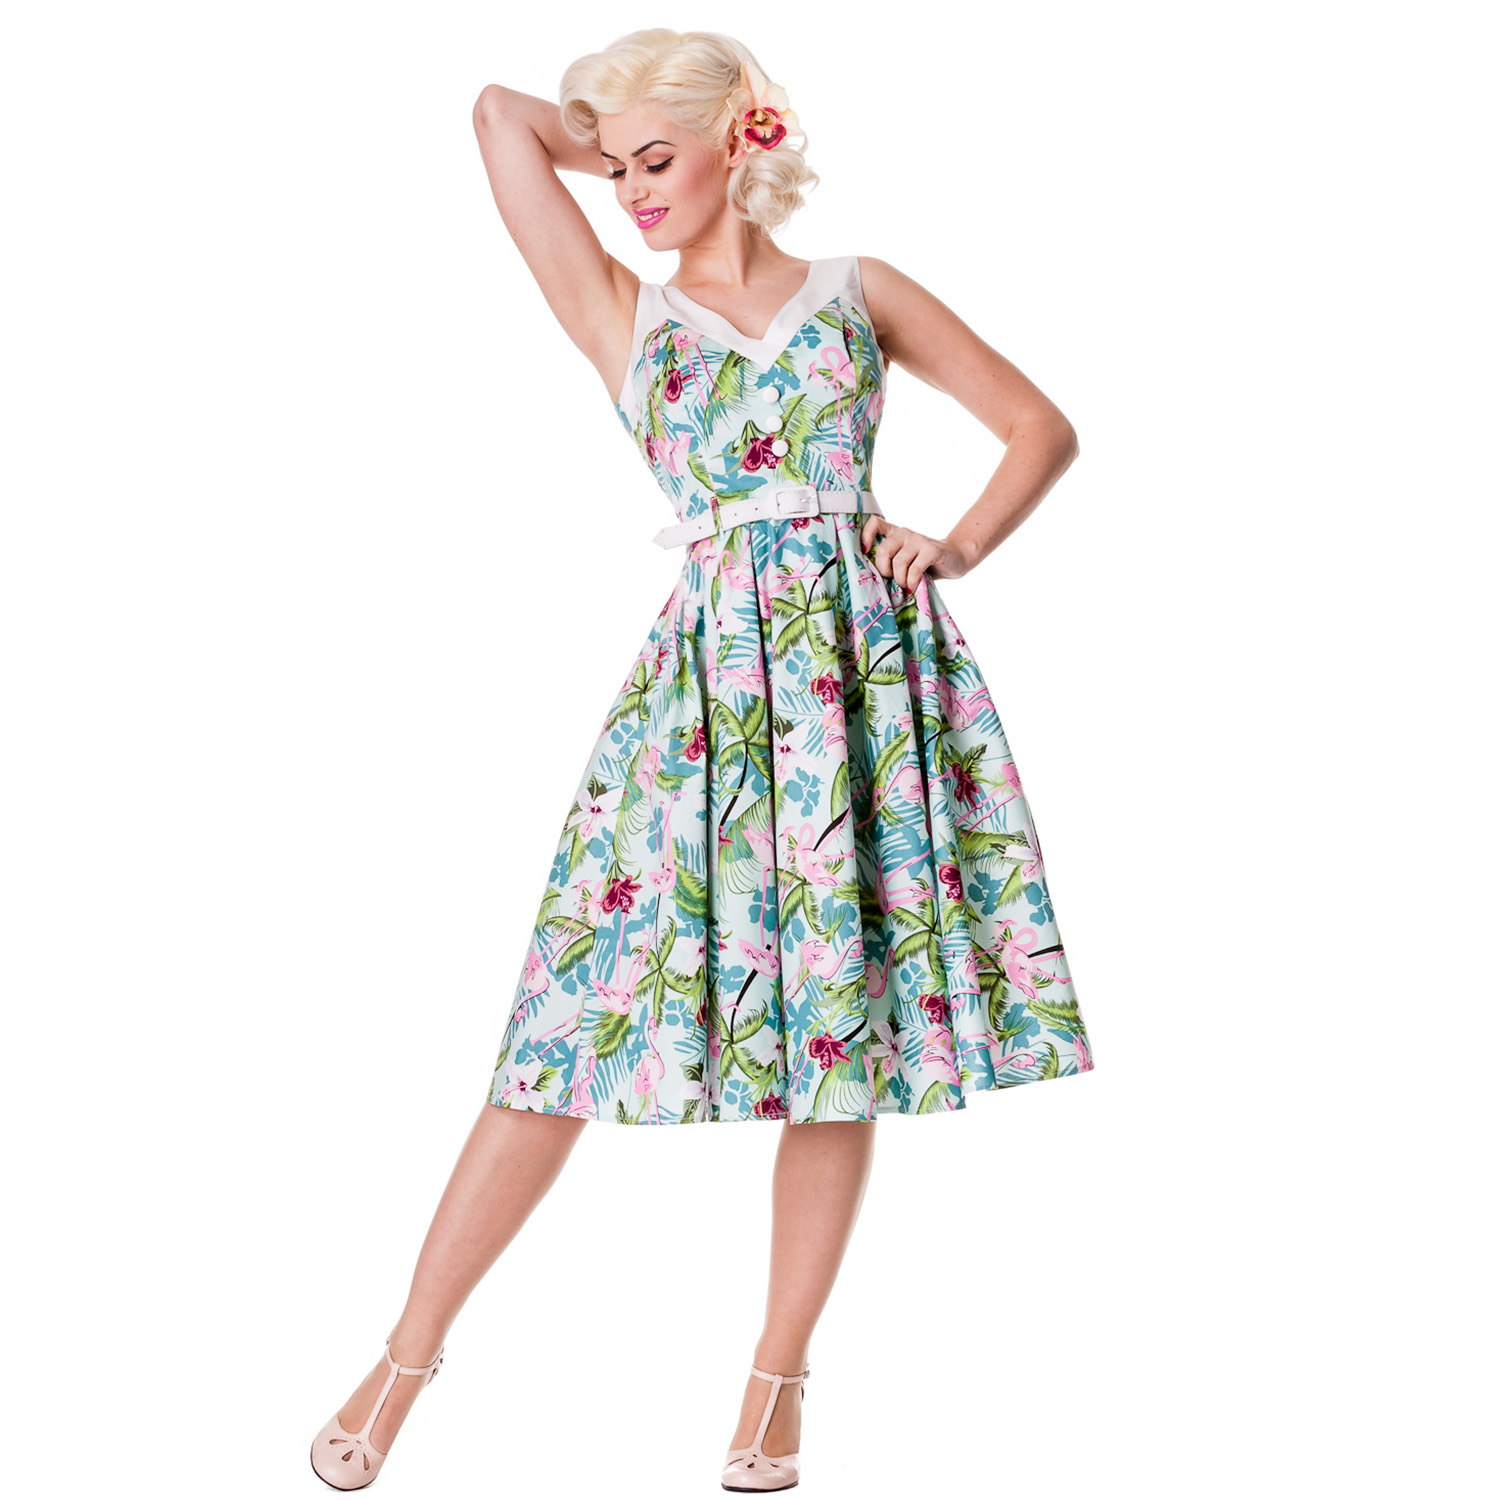 vintage style dresses image is loading hell-bunny-larissa-floral-flamingo-rockabilly-vintage-style - LTTUTJS